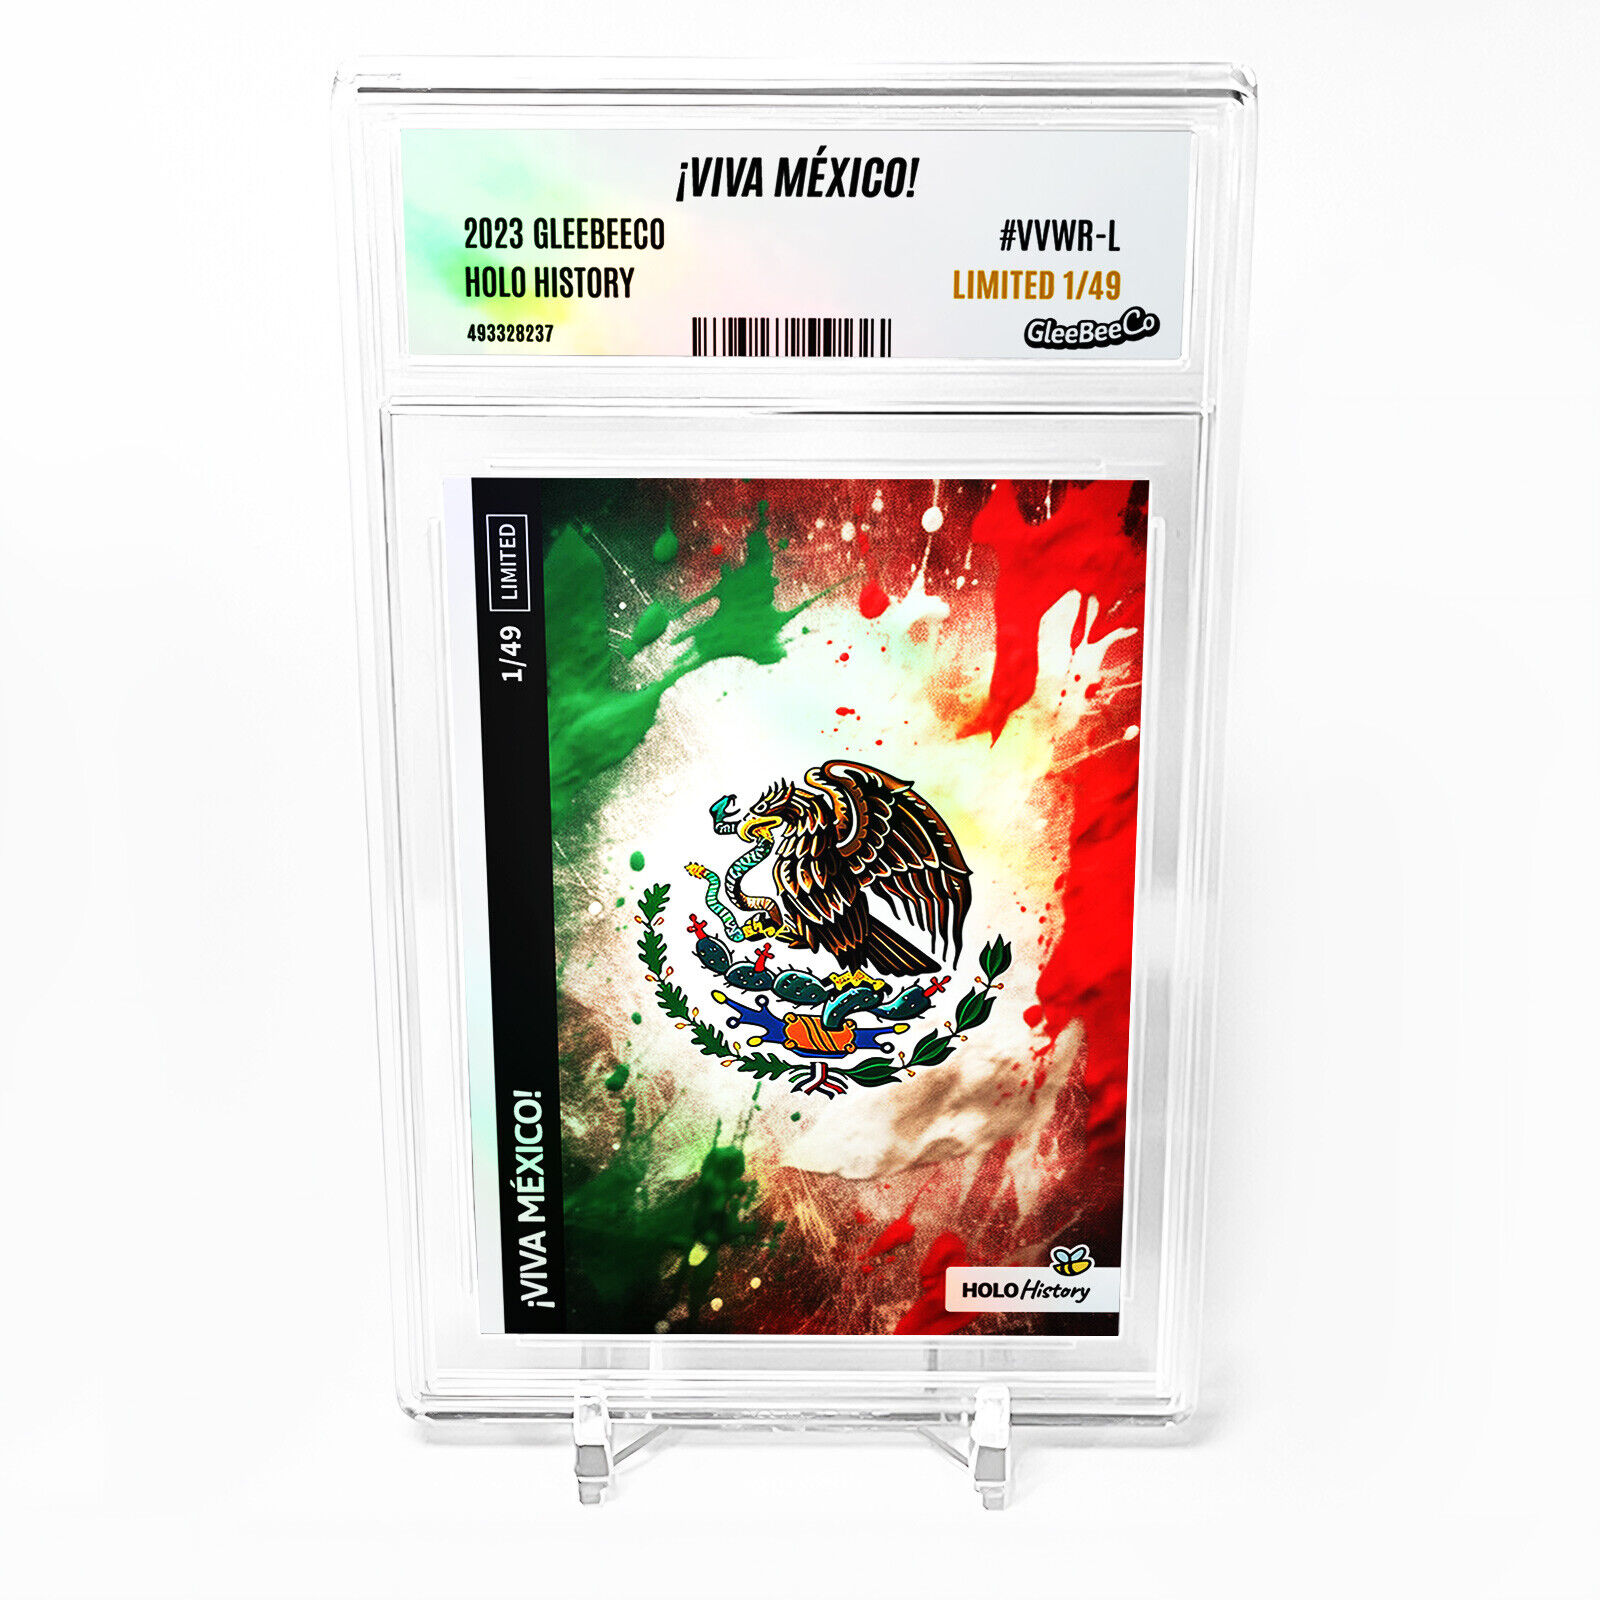 ¡VIVA MÉXICO Holographic Art Card 2023 GleeBeeCo Slabbed #VVWR-L Only /49